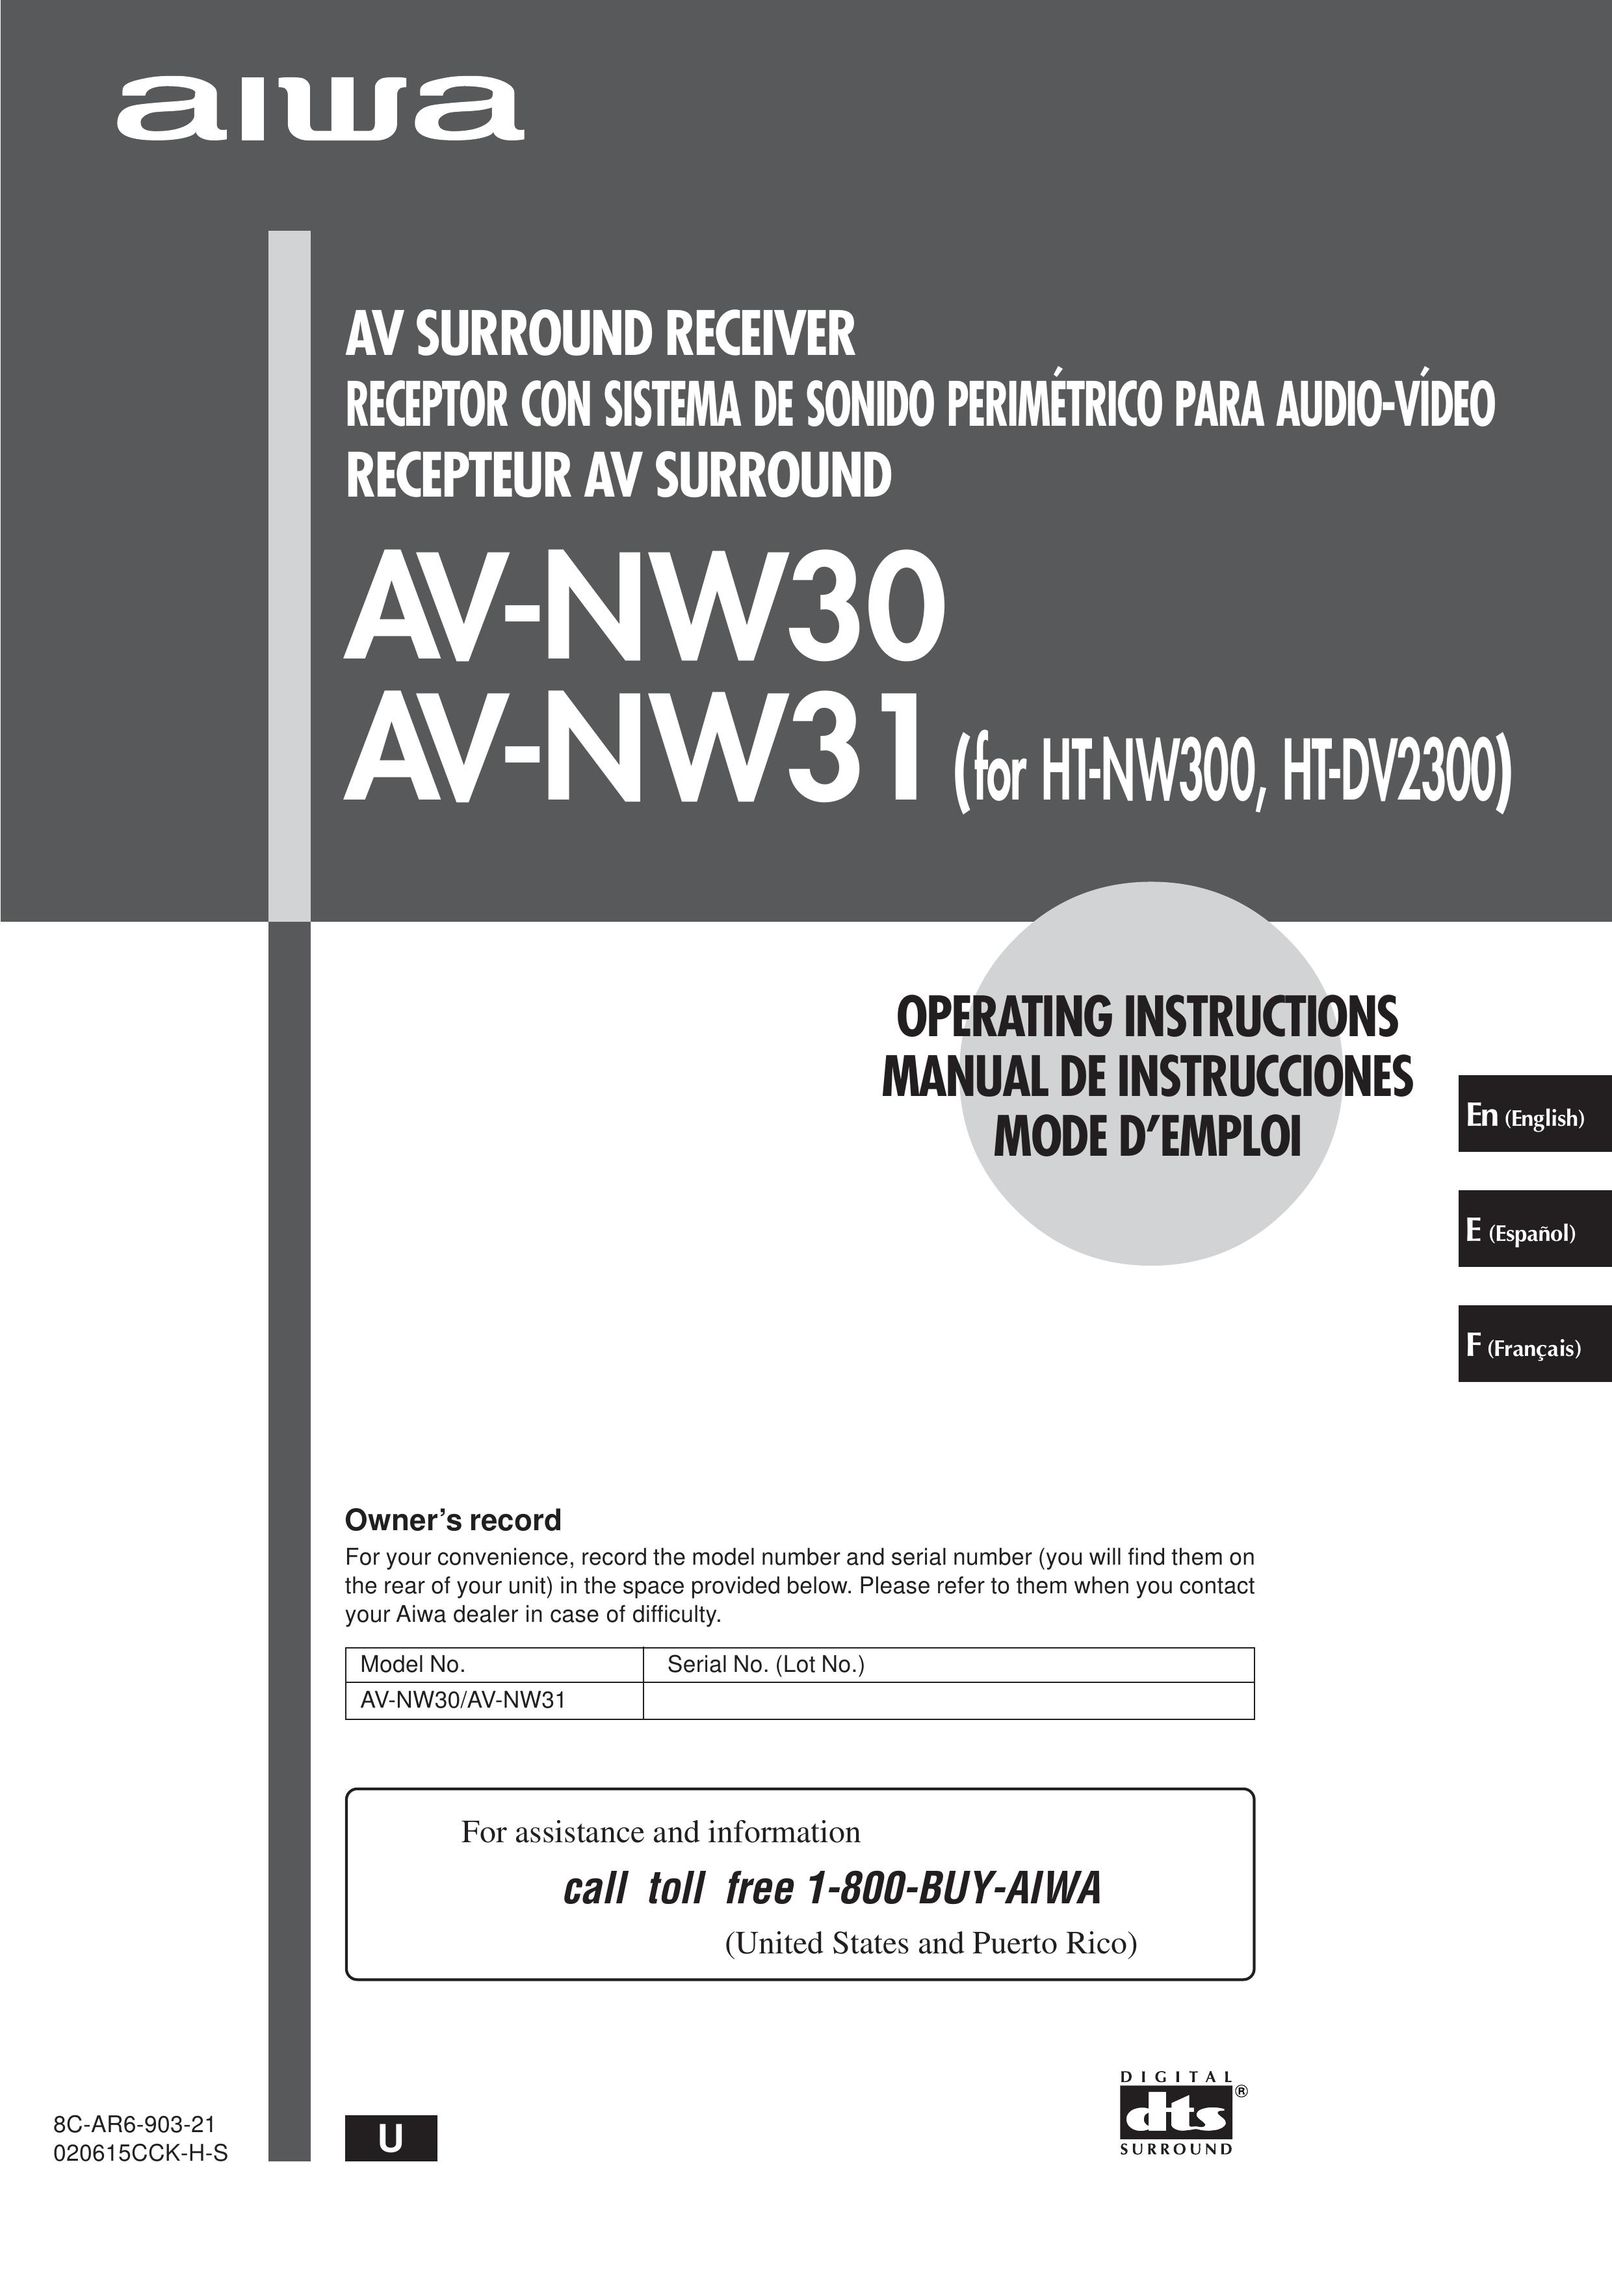 Aiwa AV-NW31 Stereo Receiver User Manual